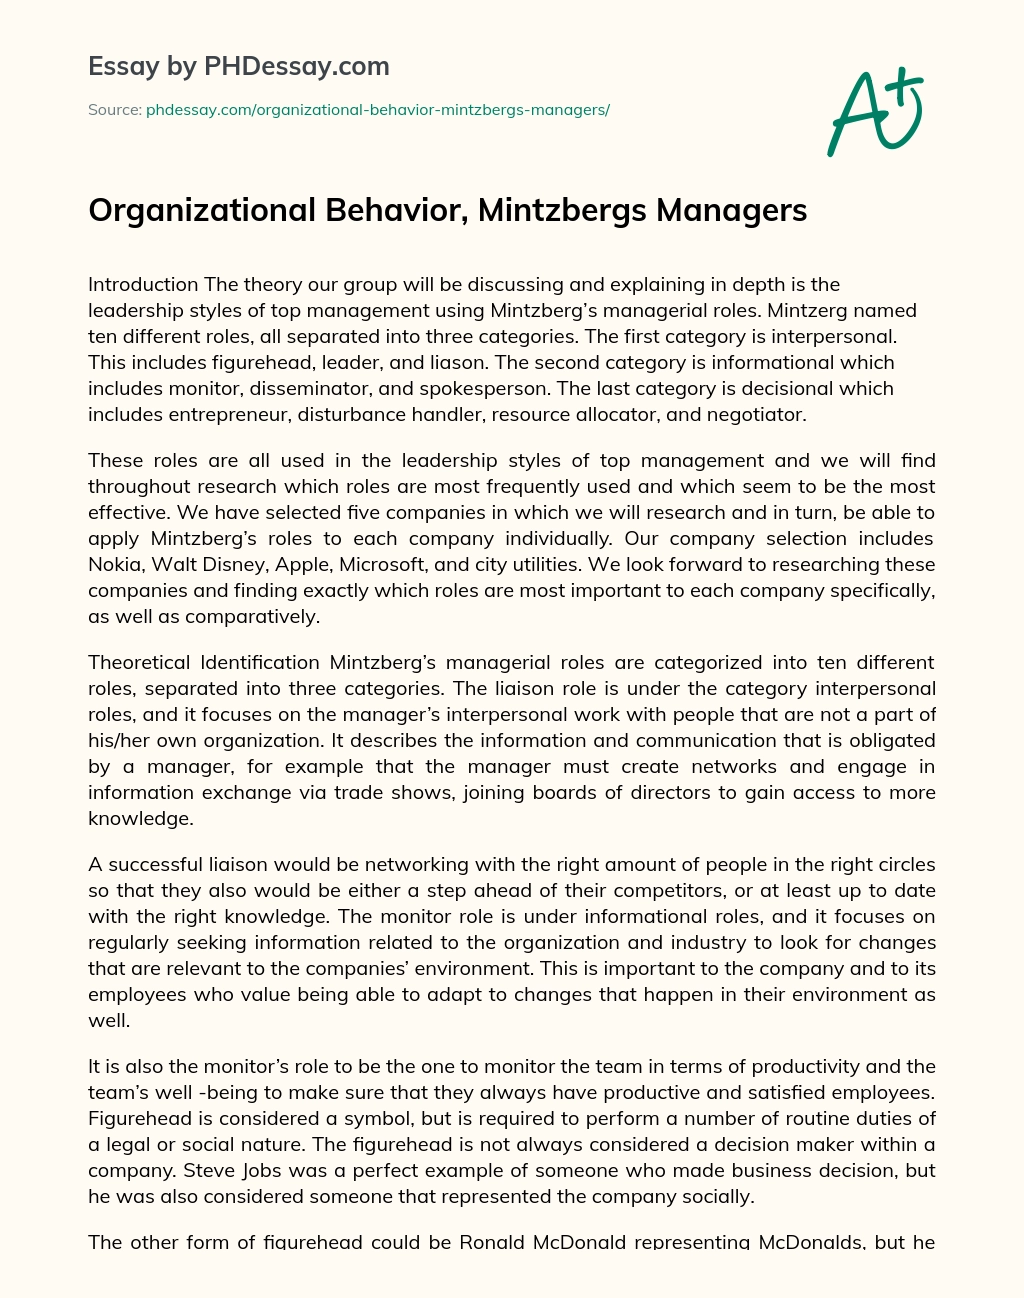 Organizational Behavior, Mintzbergs Managers essay